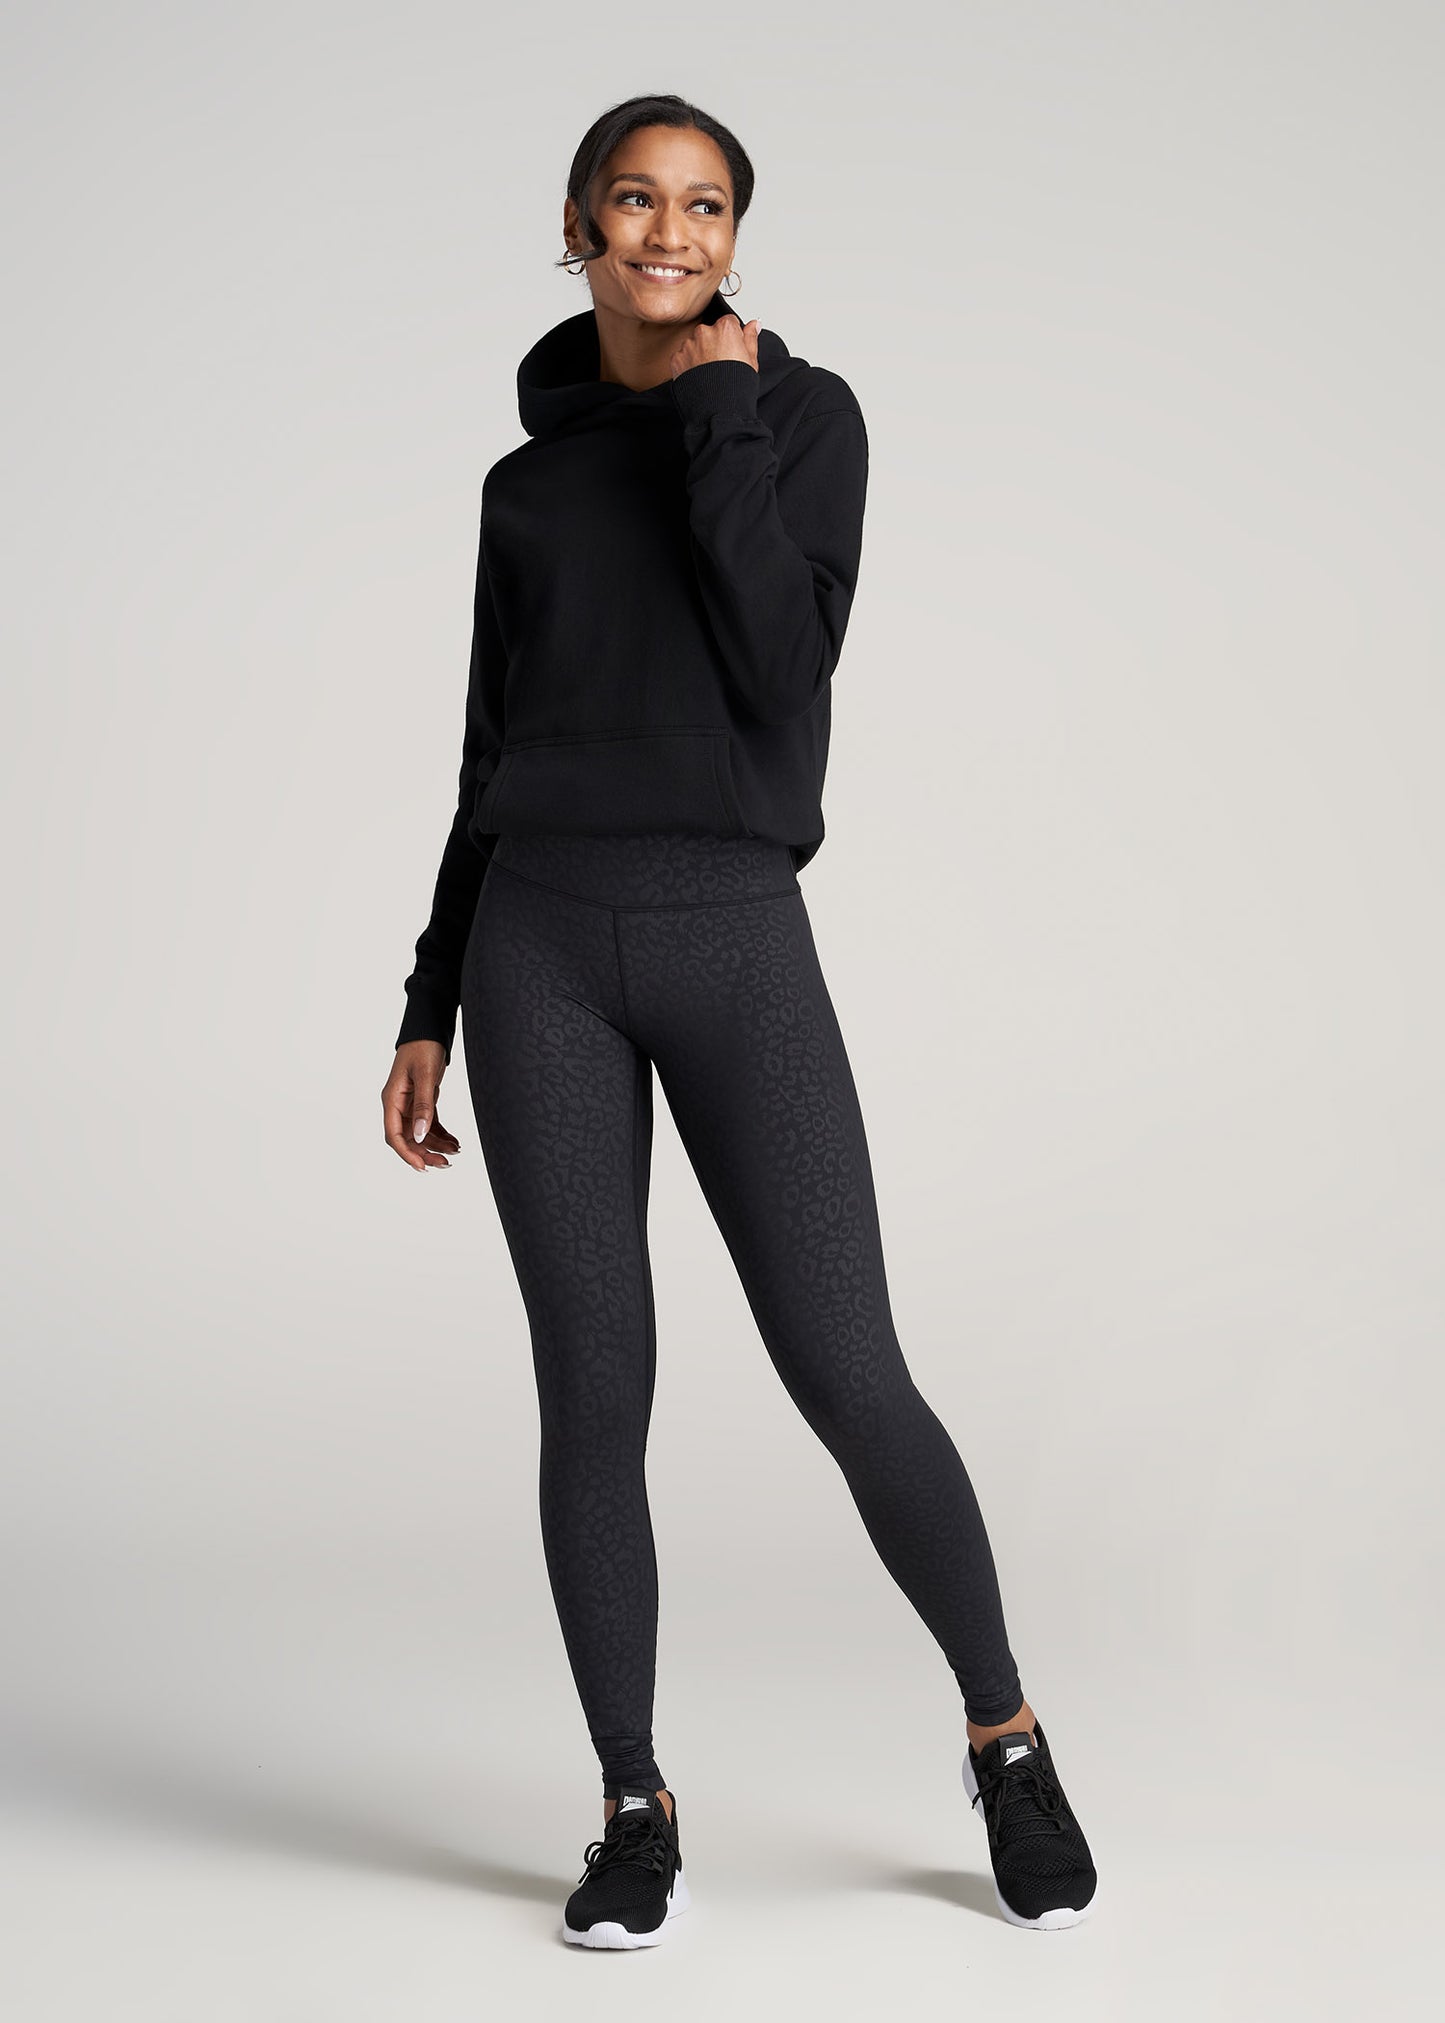 Women's Super Soft Midi-rise Printed Leggings Black Army One Size